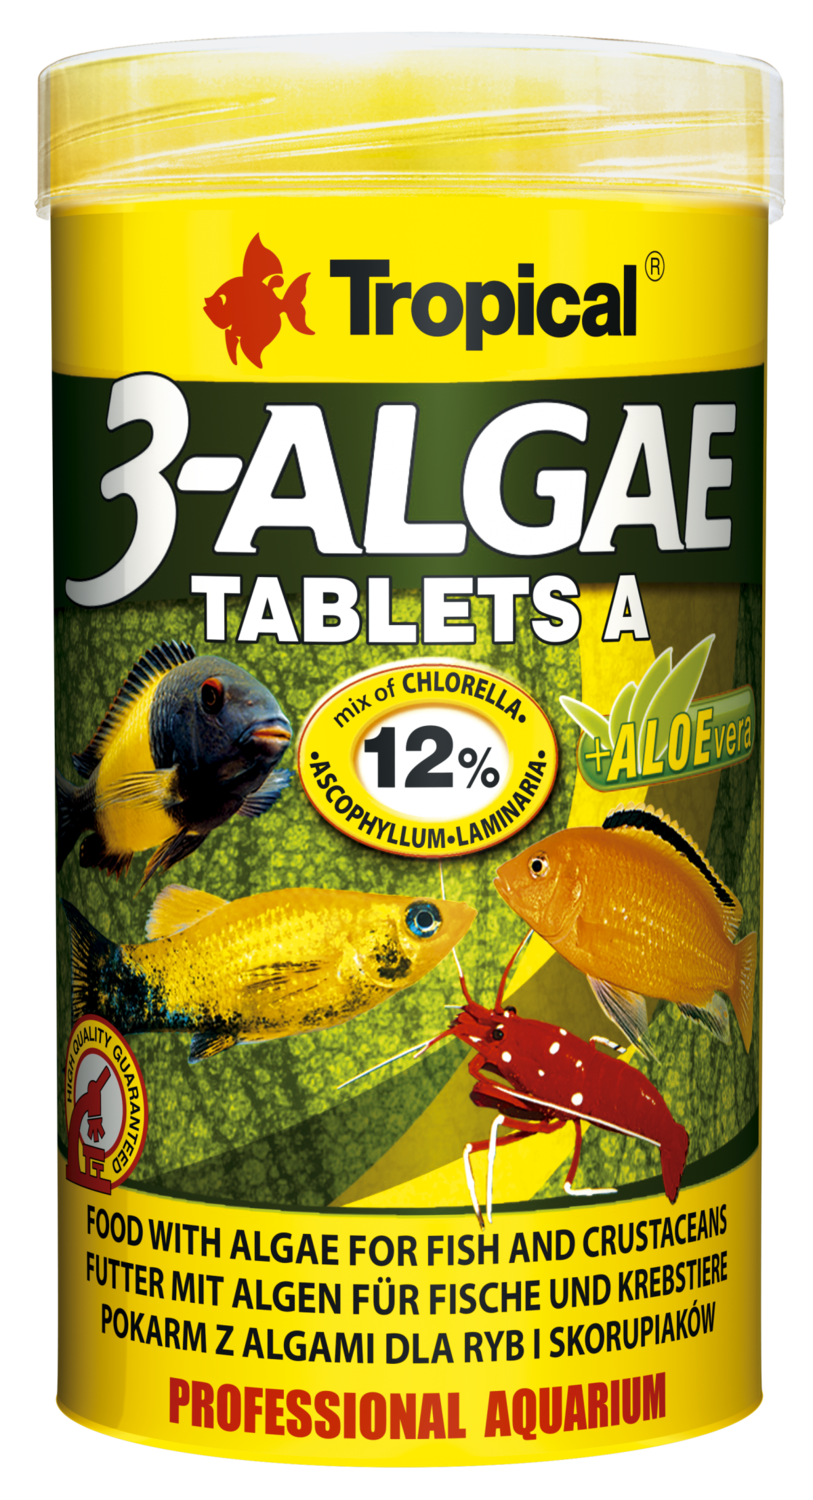 Tropical 3-ALGAE Tablets adhésive, Taille: 50ml 80 tablettes